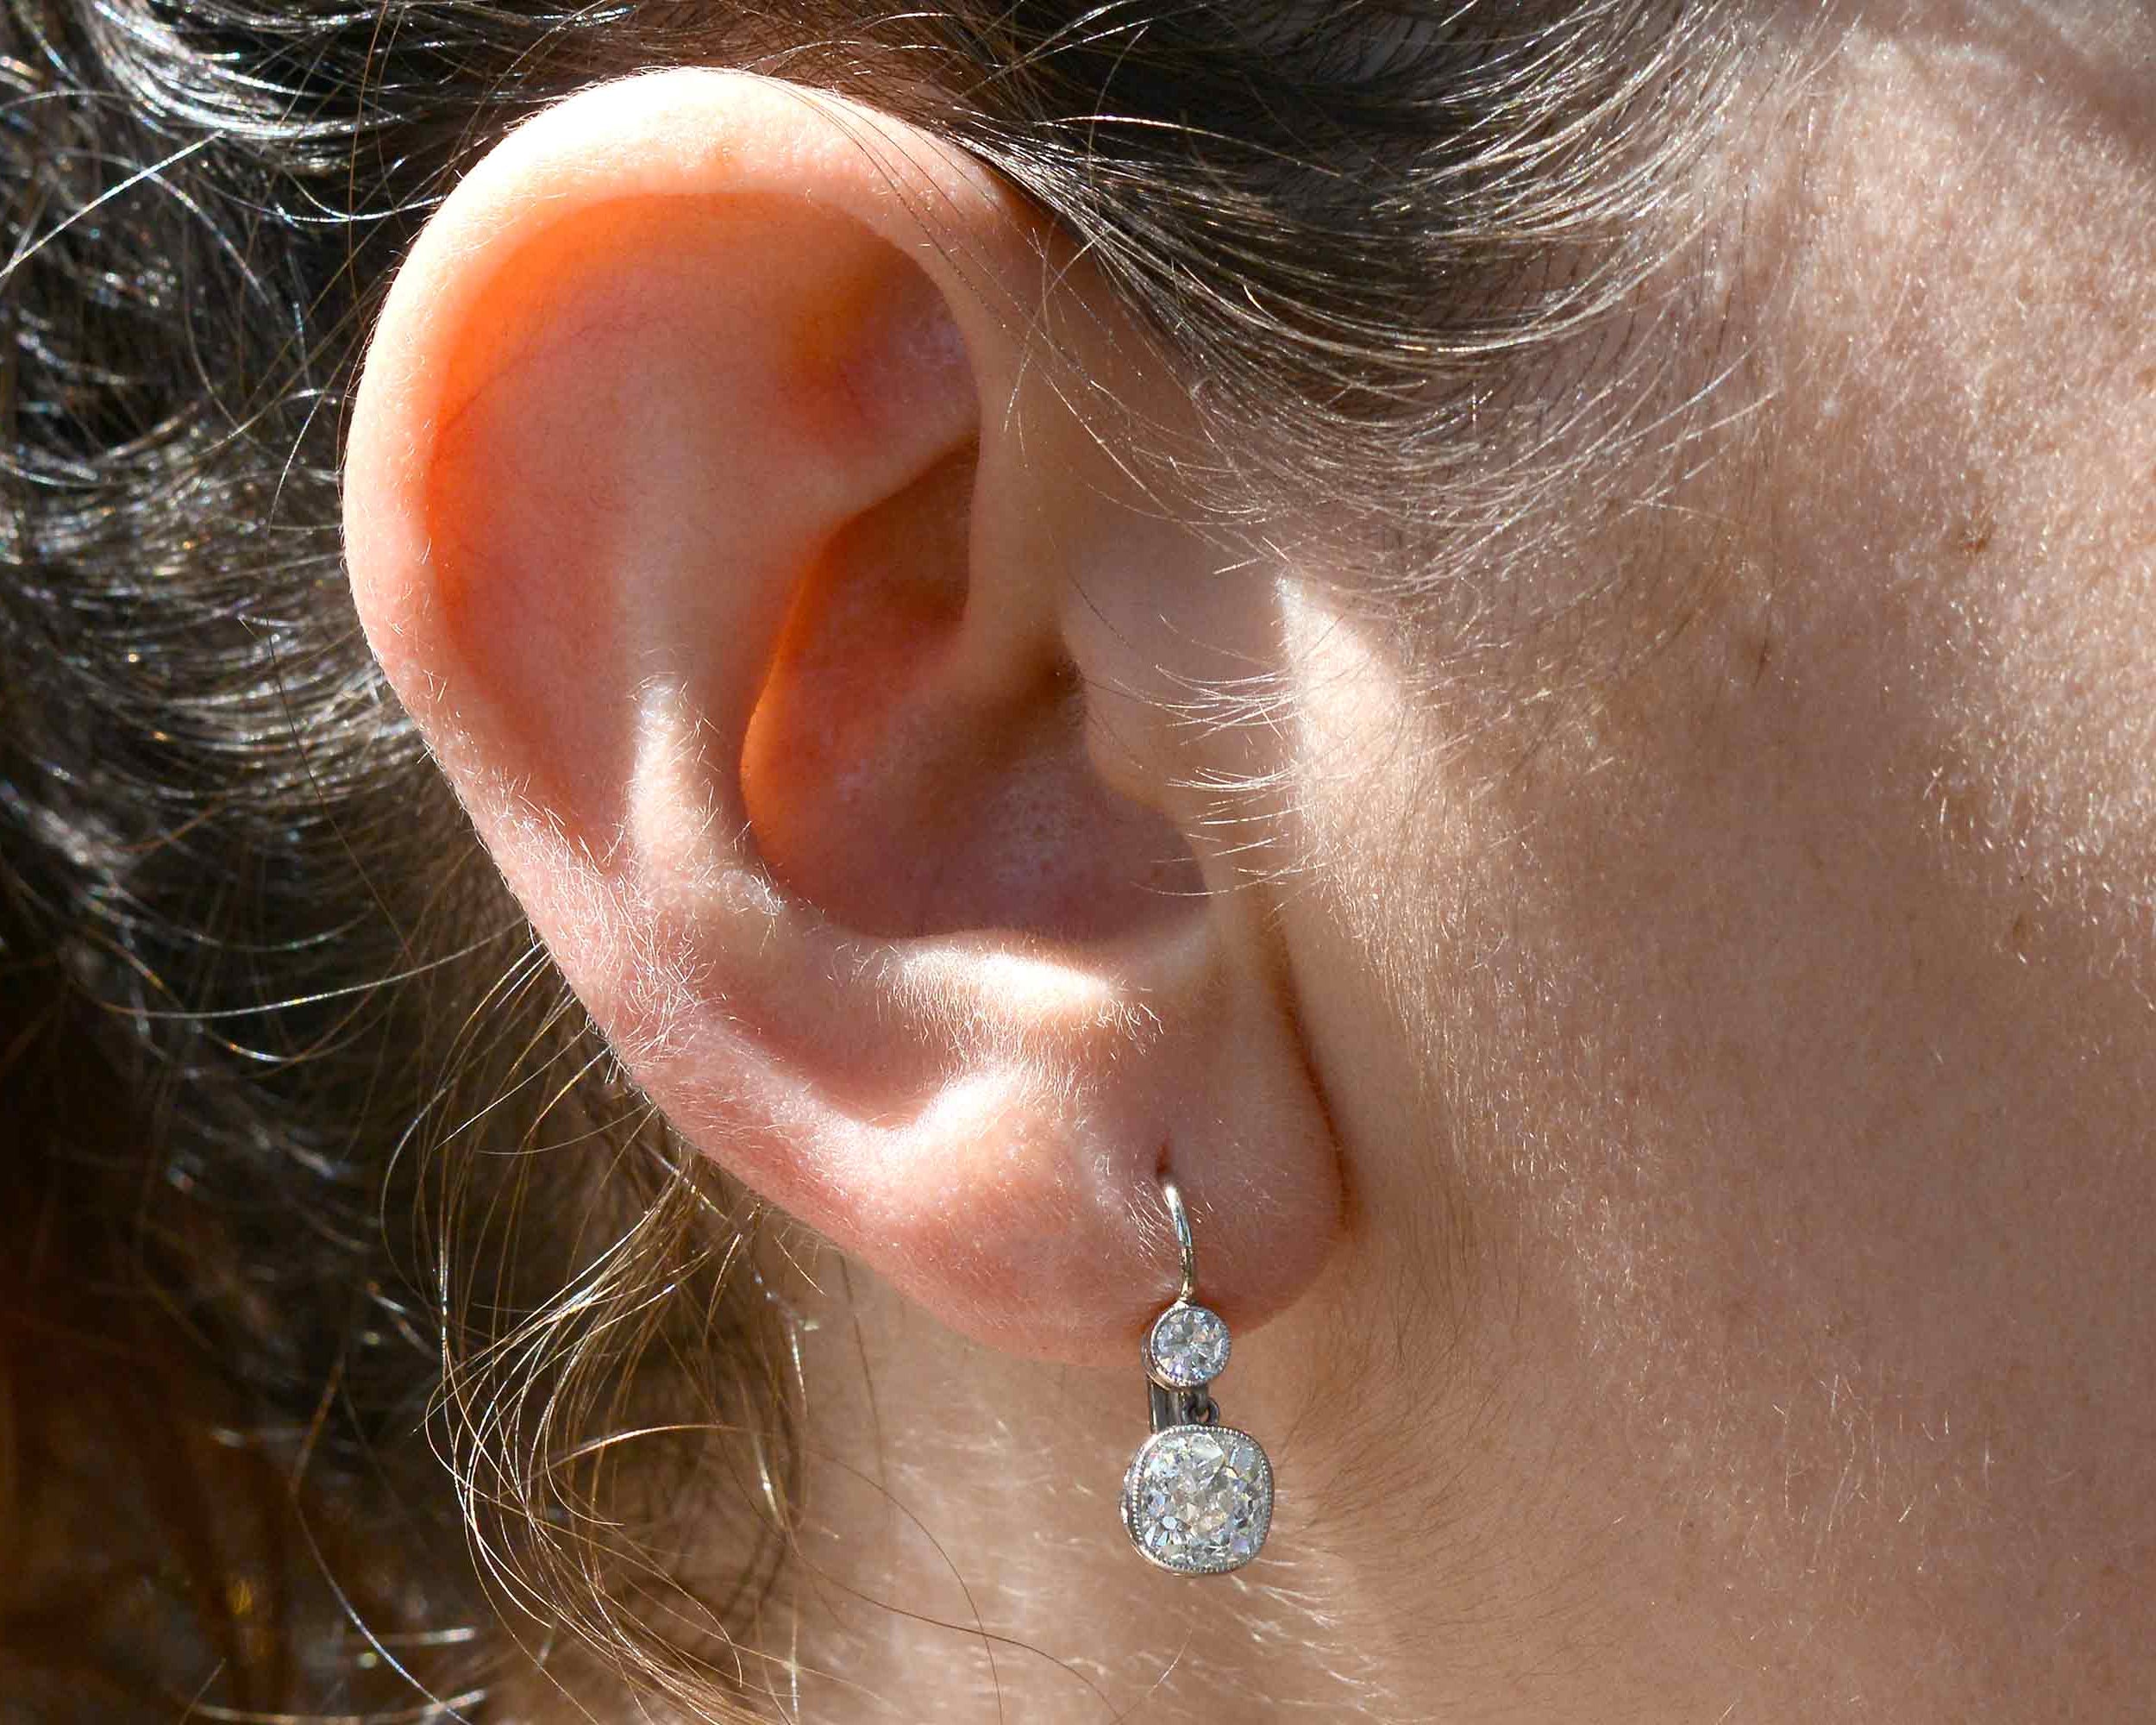 2.50 Carat Cushion Cut Diamond Art Deco Inspired Dangle Earrings